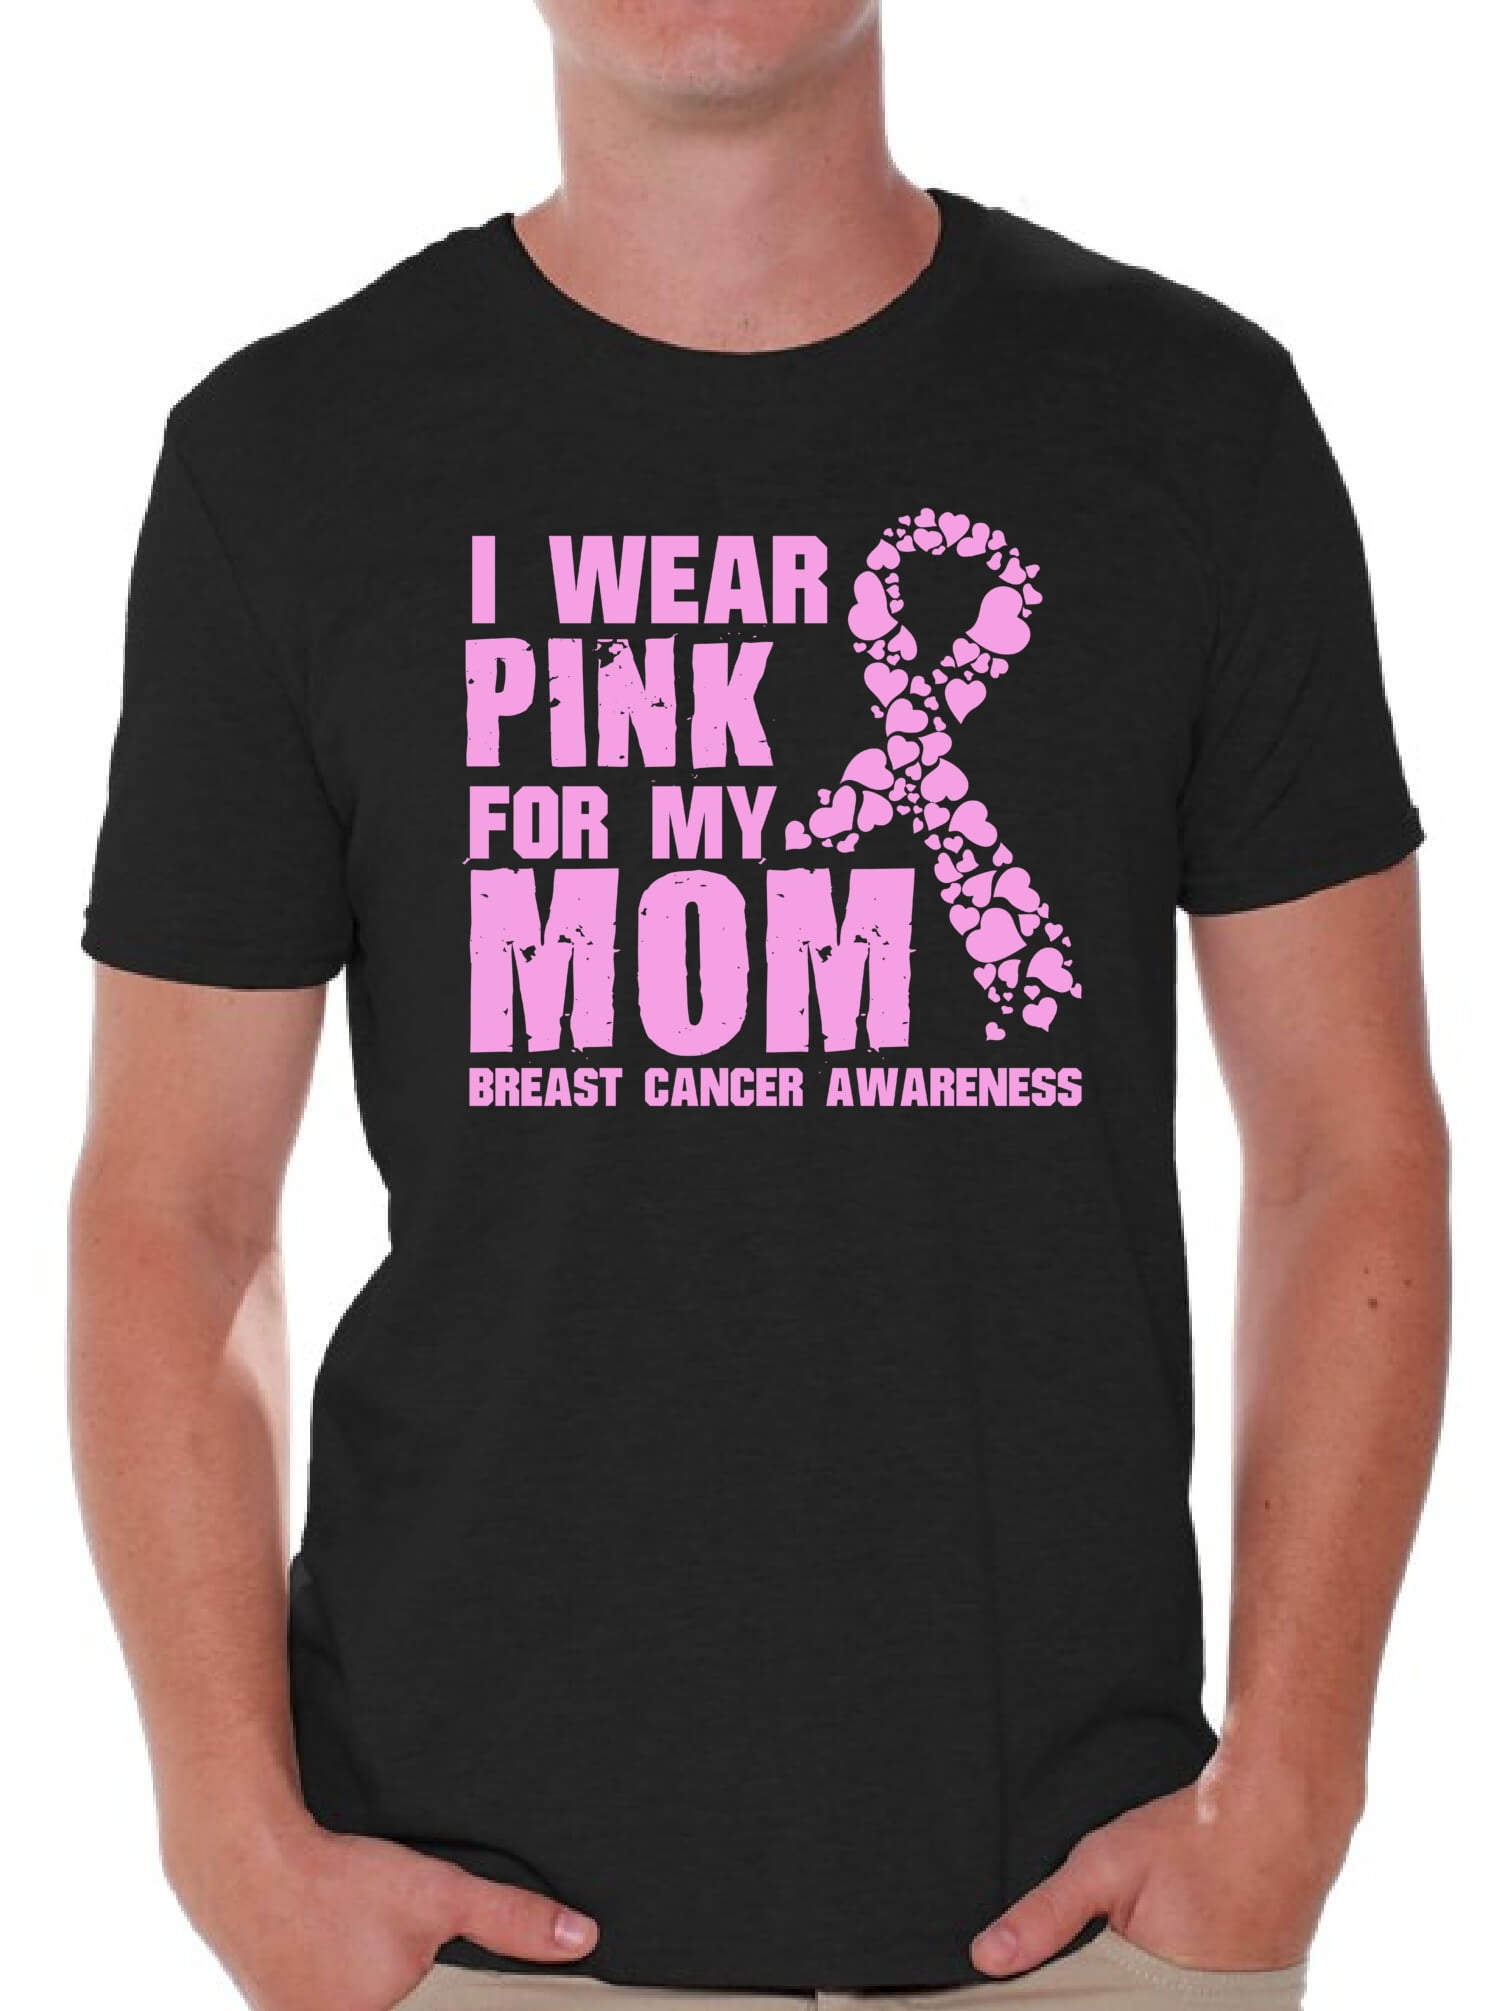 Cancer Awereness Shirts For Men Breast Cancer Awareness Shirts Pink Ribbon T Shirts